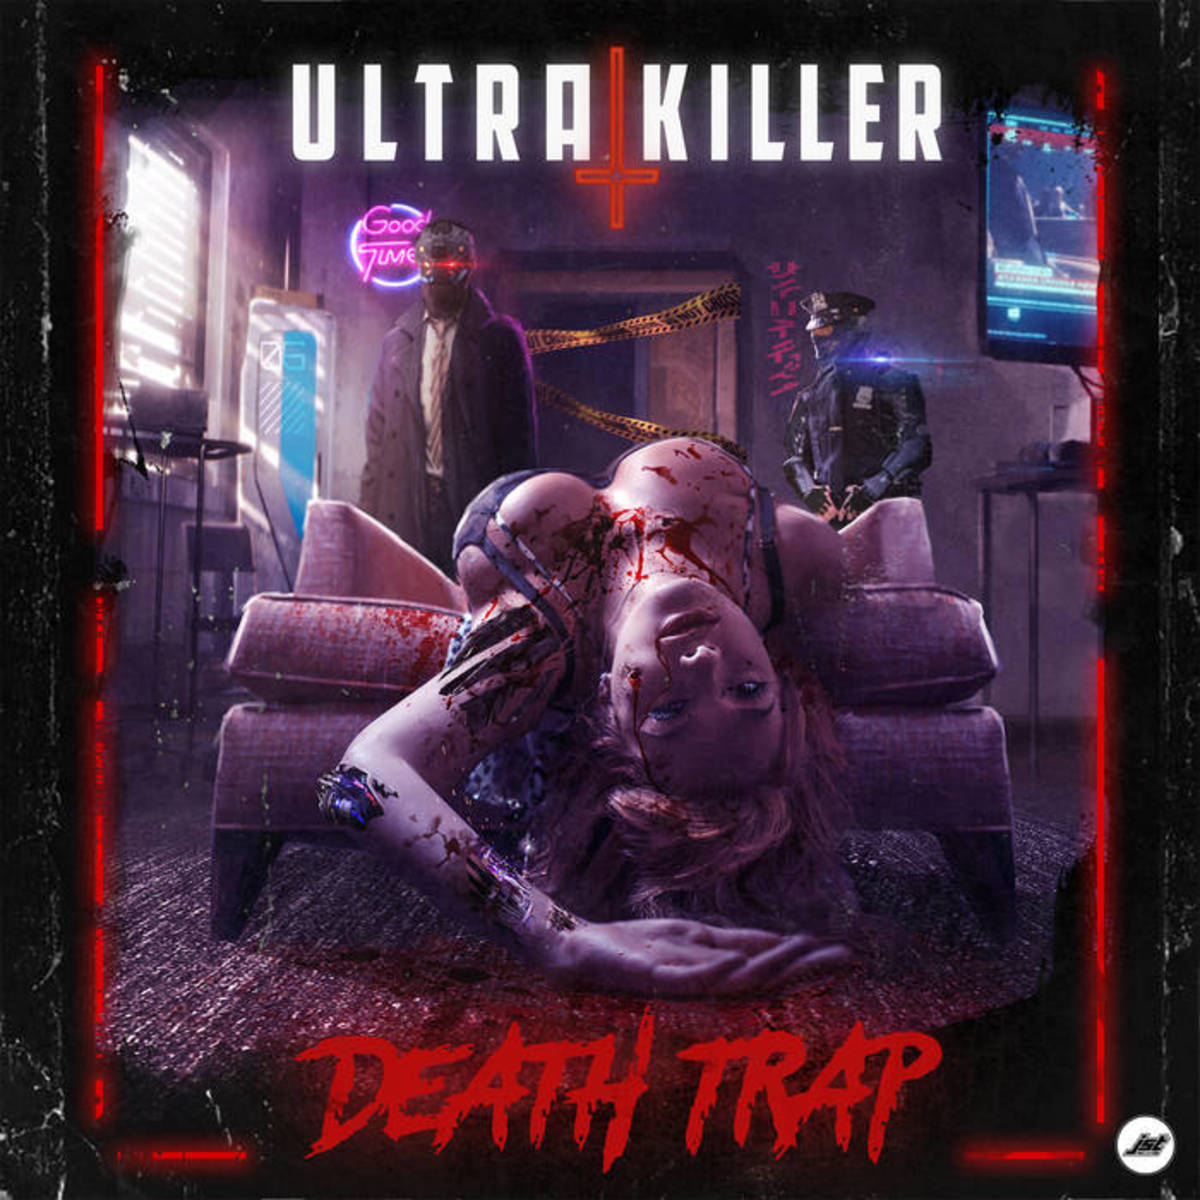 "Death Trap" by UltraKiller album cover